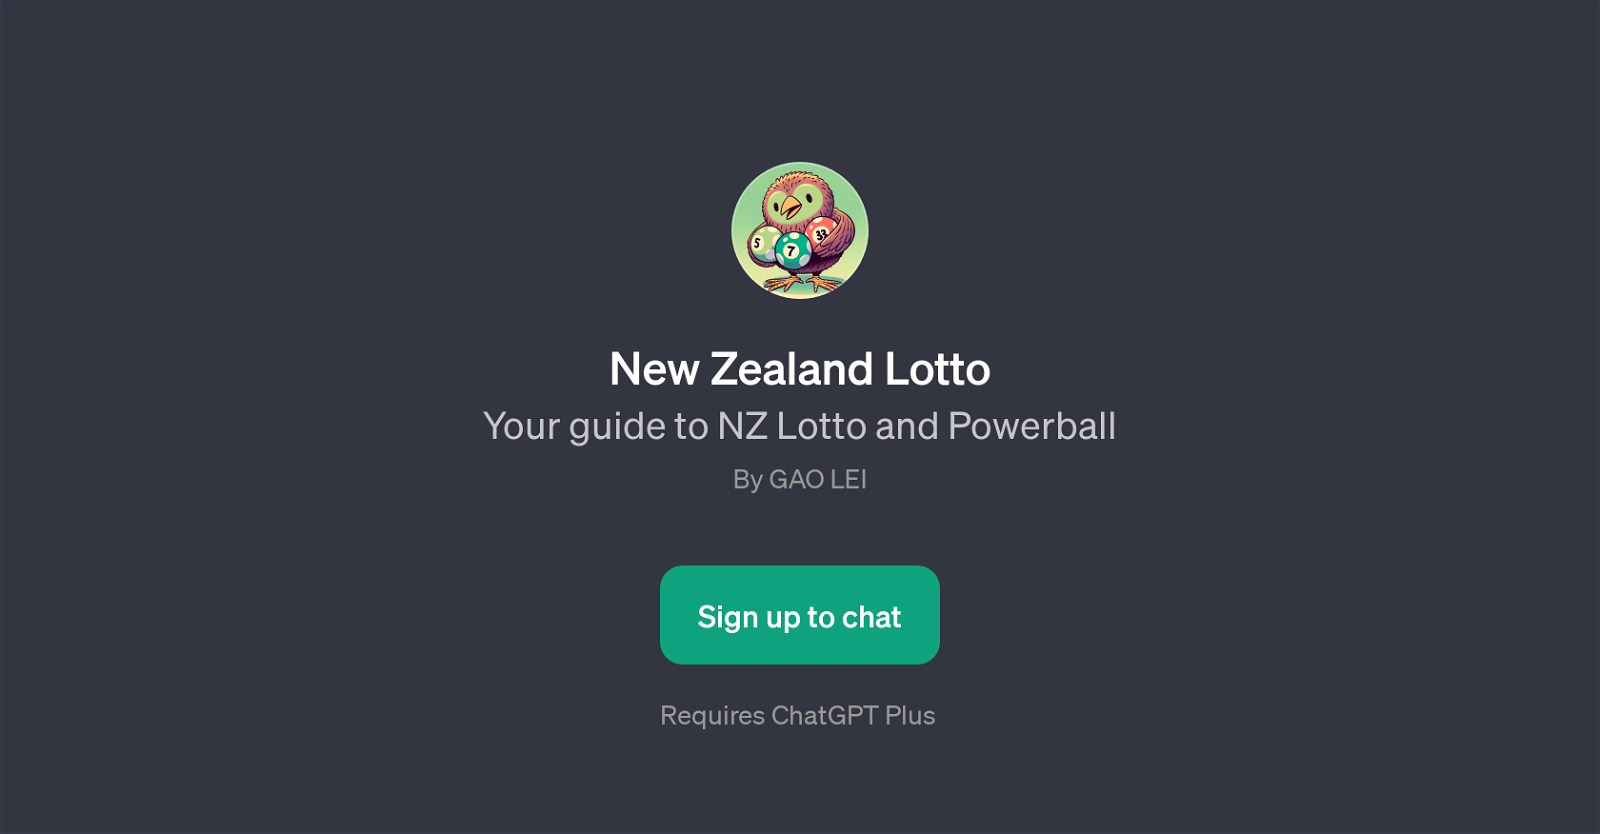 New Zealand Lotto website